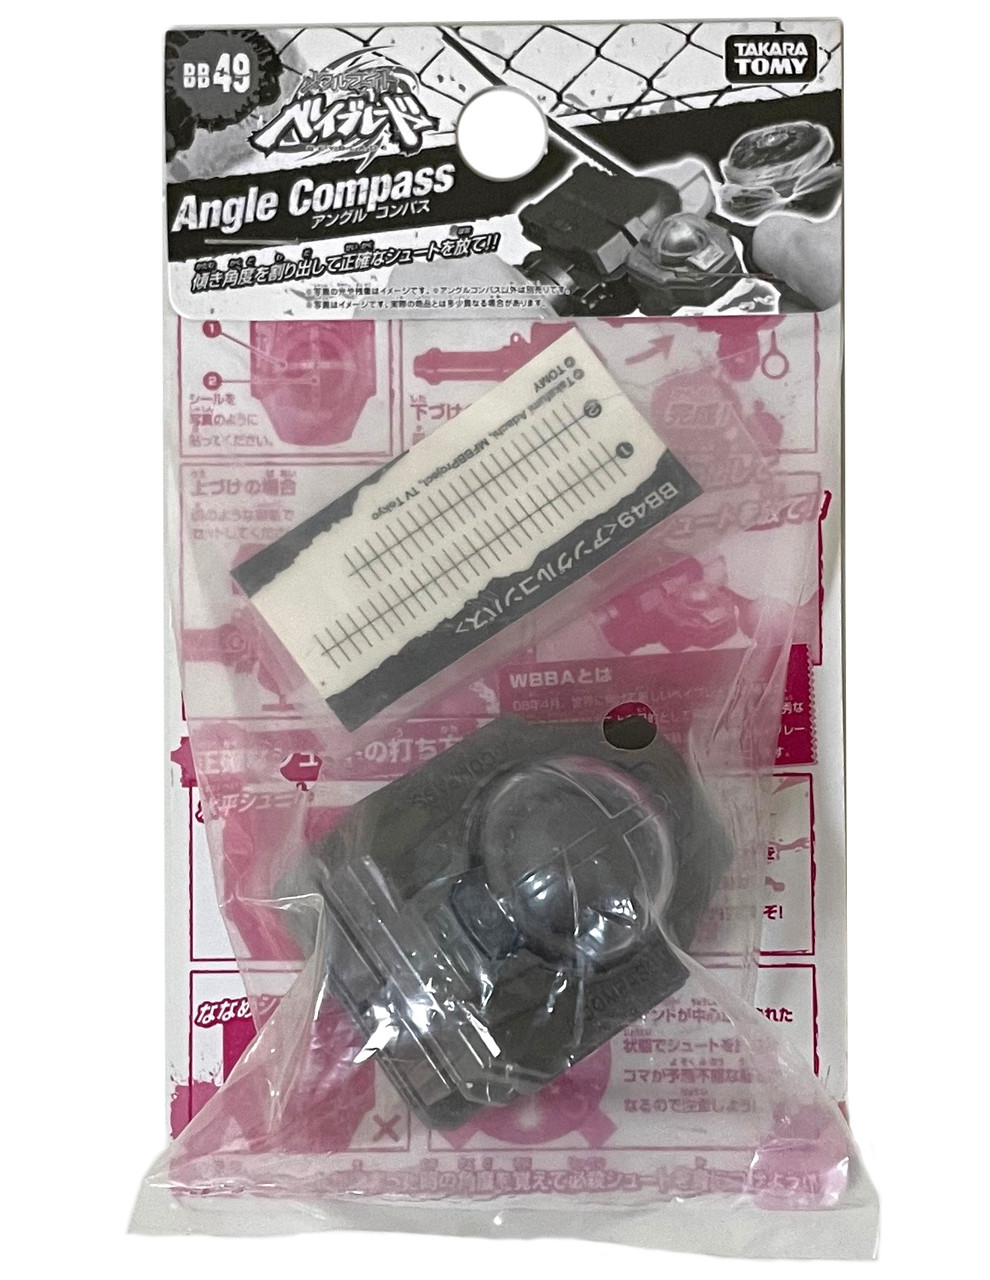 TAKARA TOMY Angle Compass, Metal Grip Accessory, BB-49 -